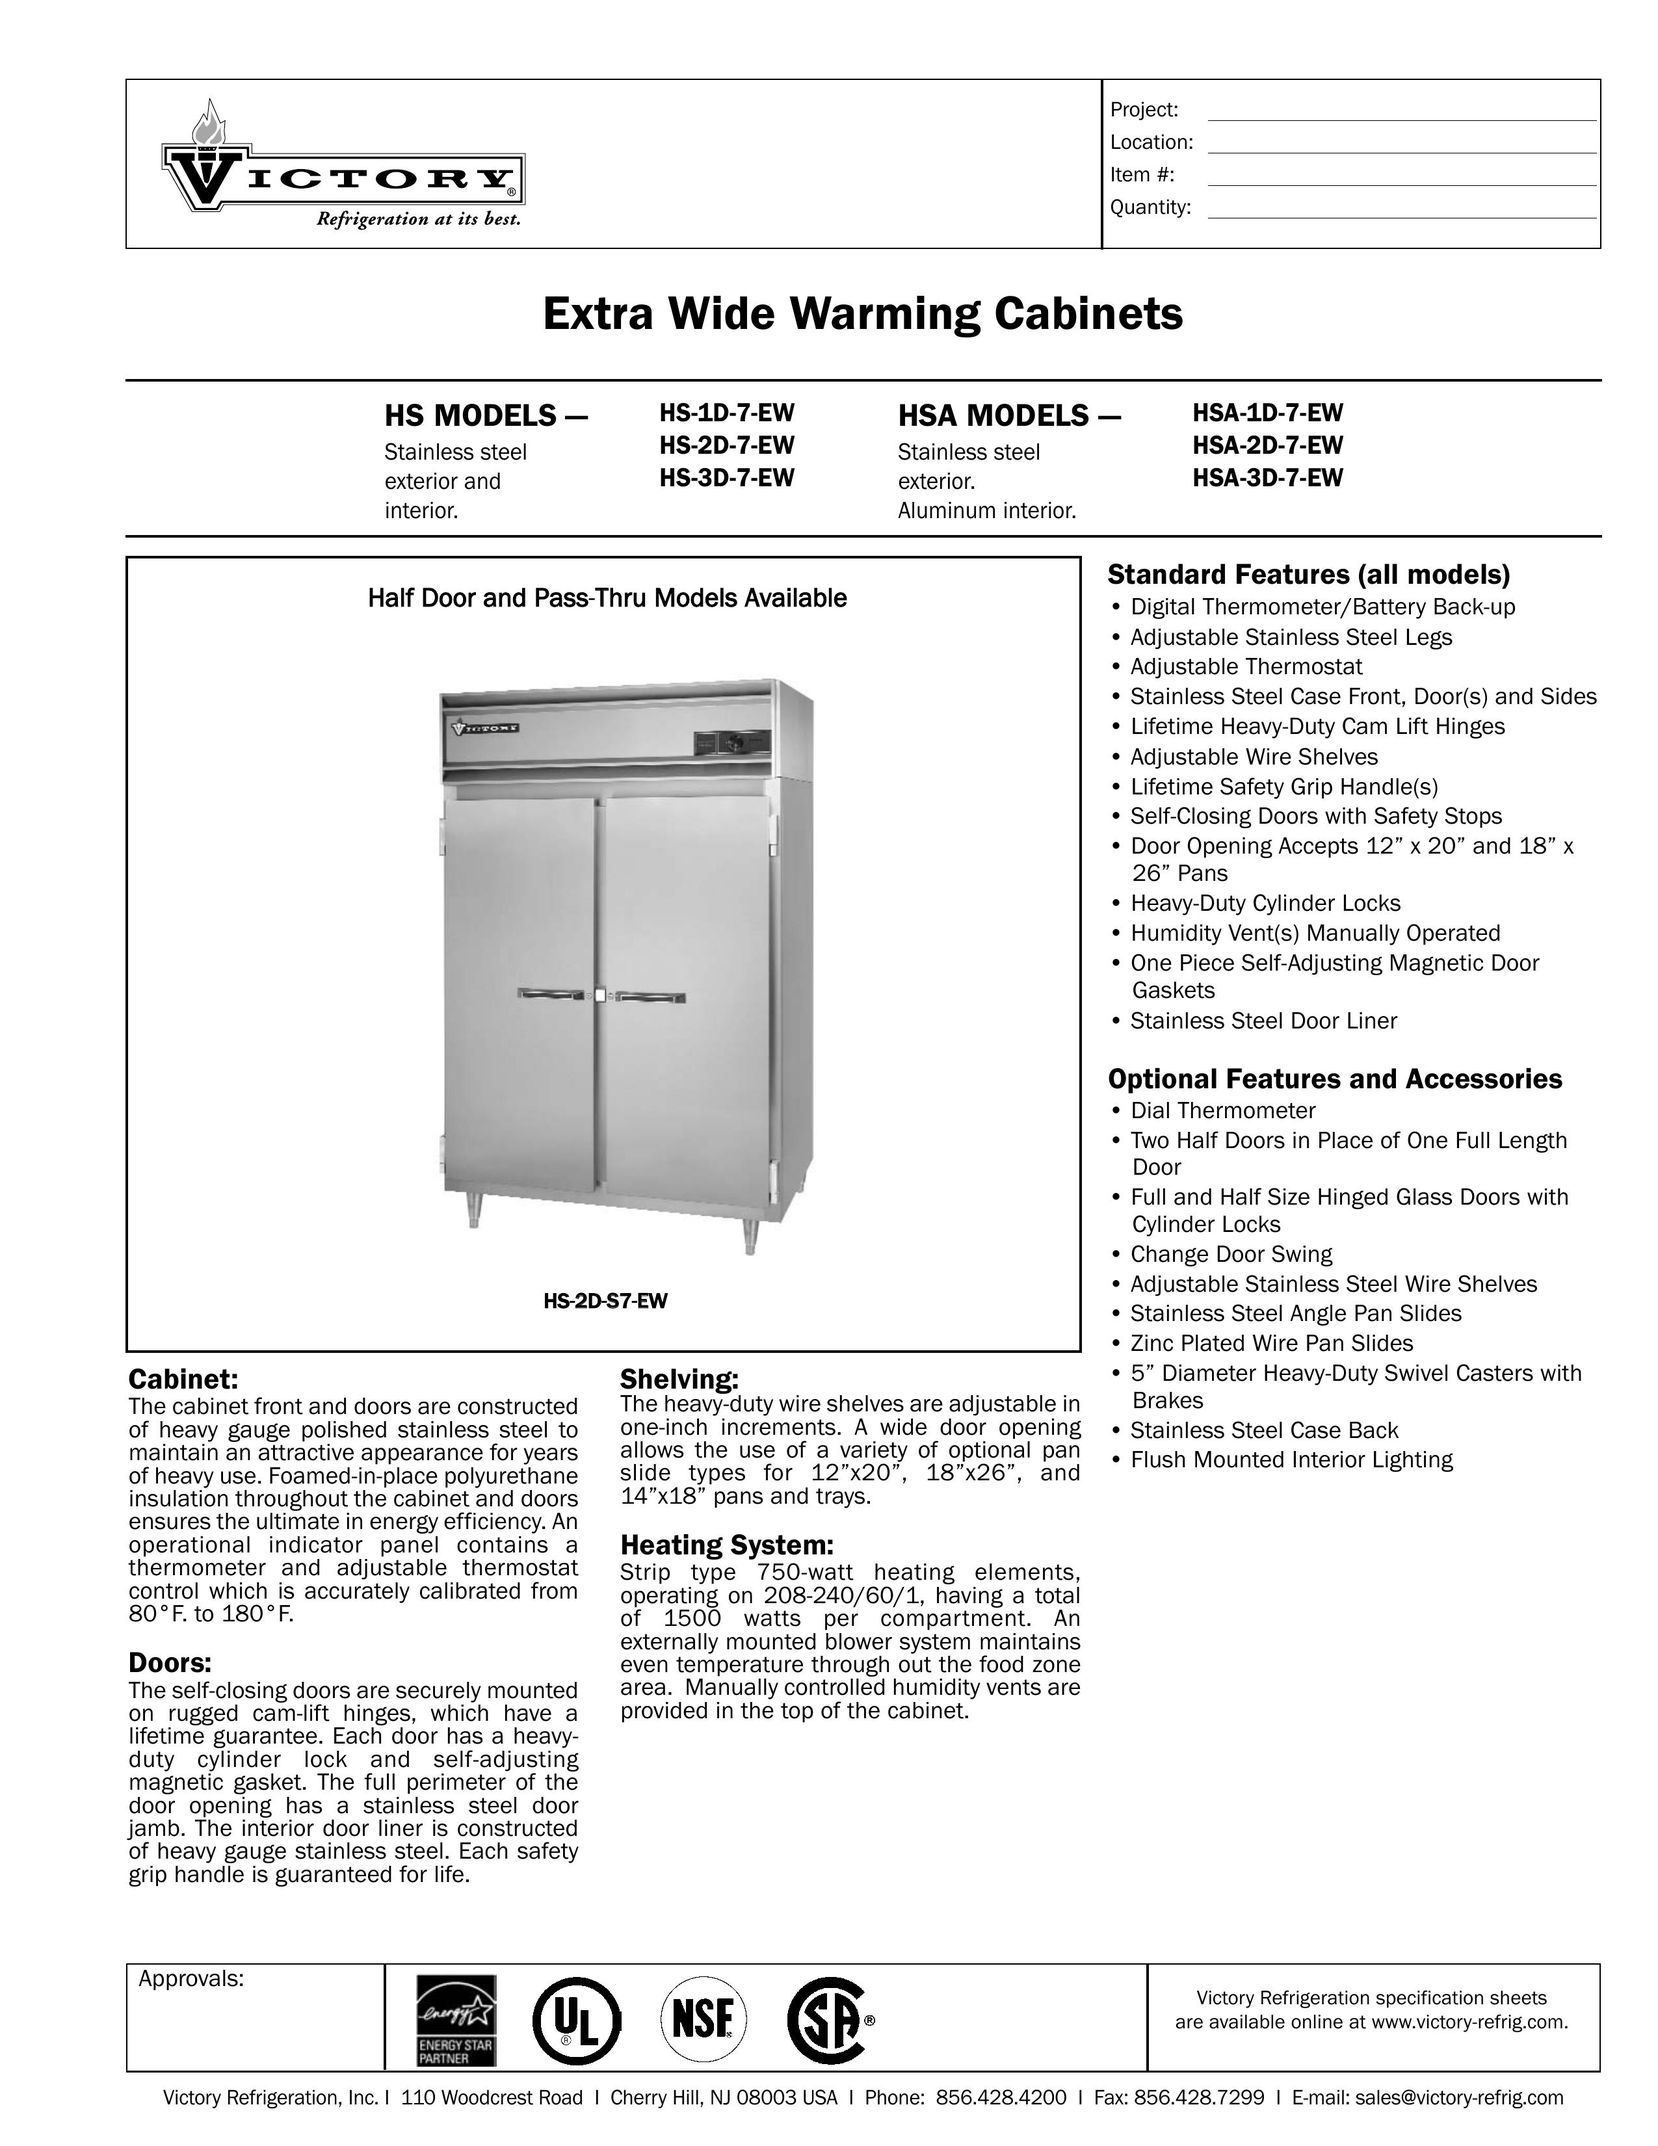 Victory Refrigeration HSA-2D-7-EW Food Warmer User Manual